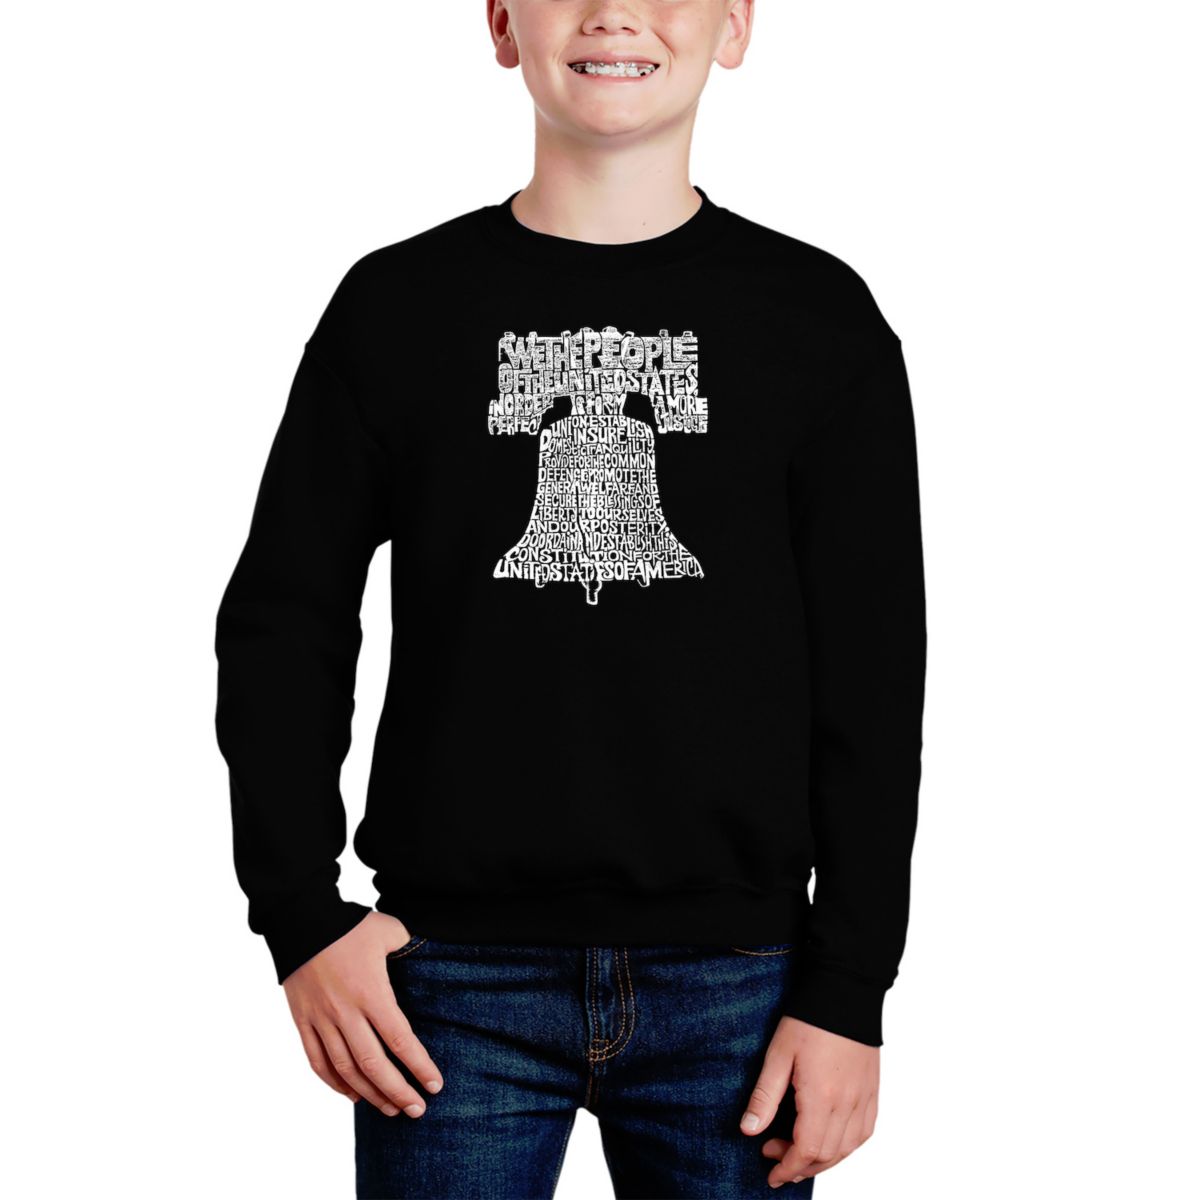 Liberty Bell - Boy's Word Art Crewneck Sweatshirt LA Pop Art